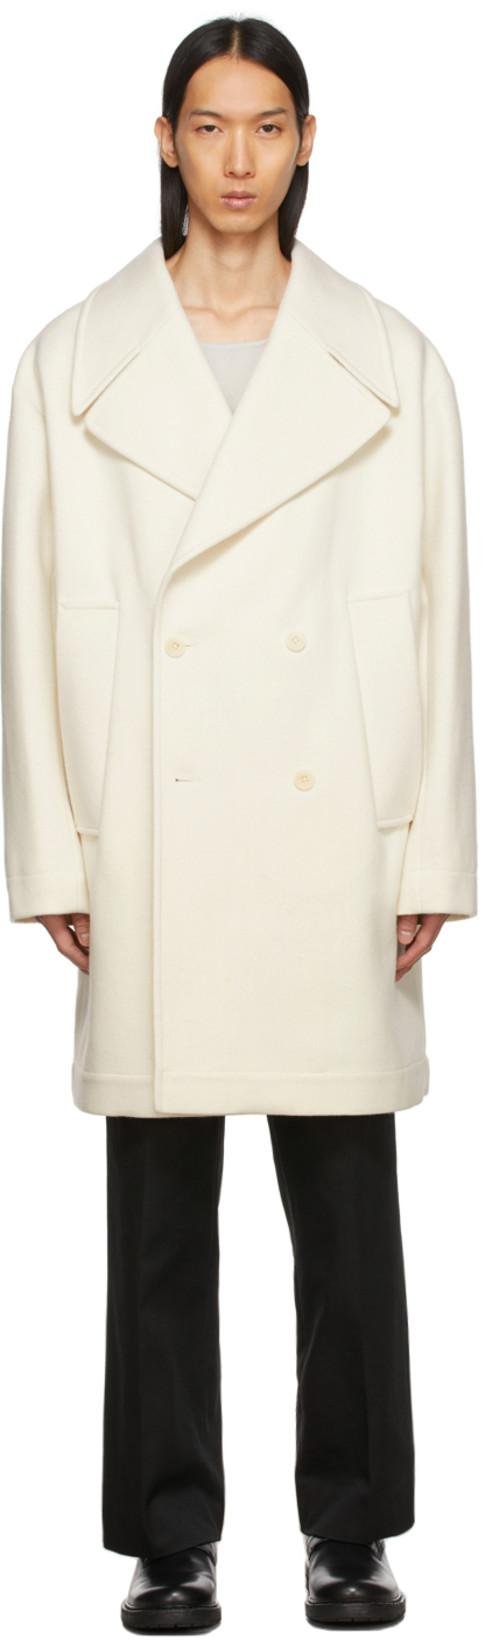 Off-White Wool Coat by HAIDER ACKERMANN